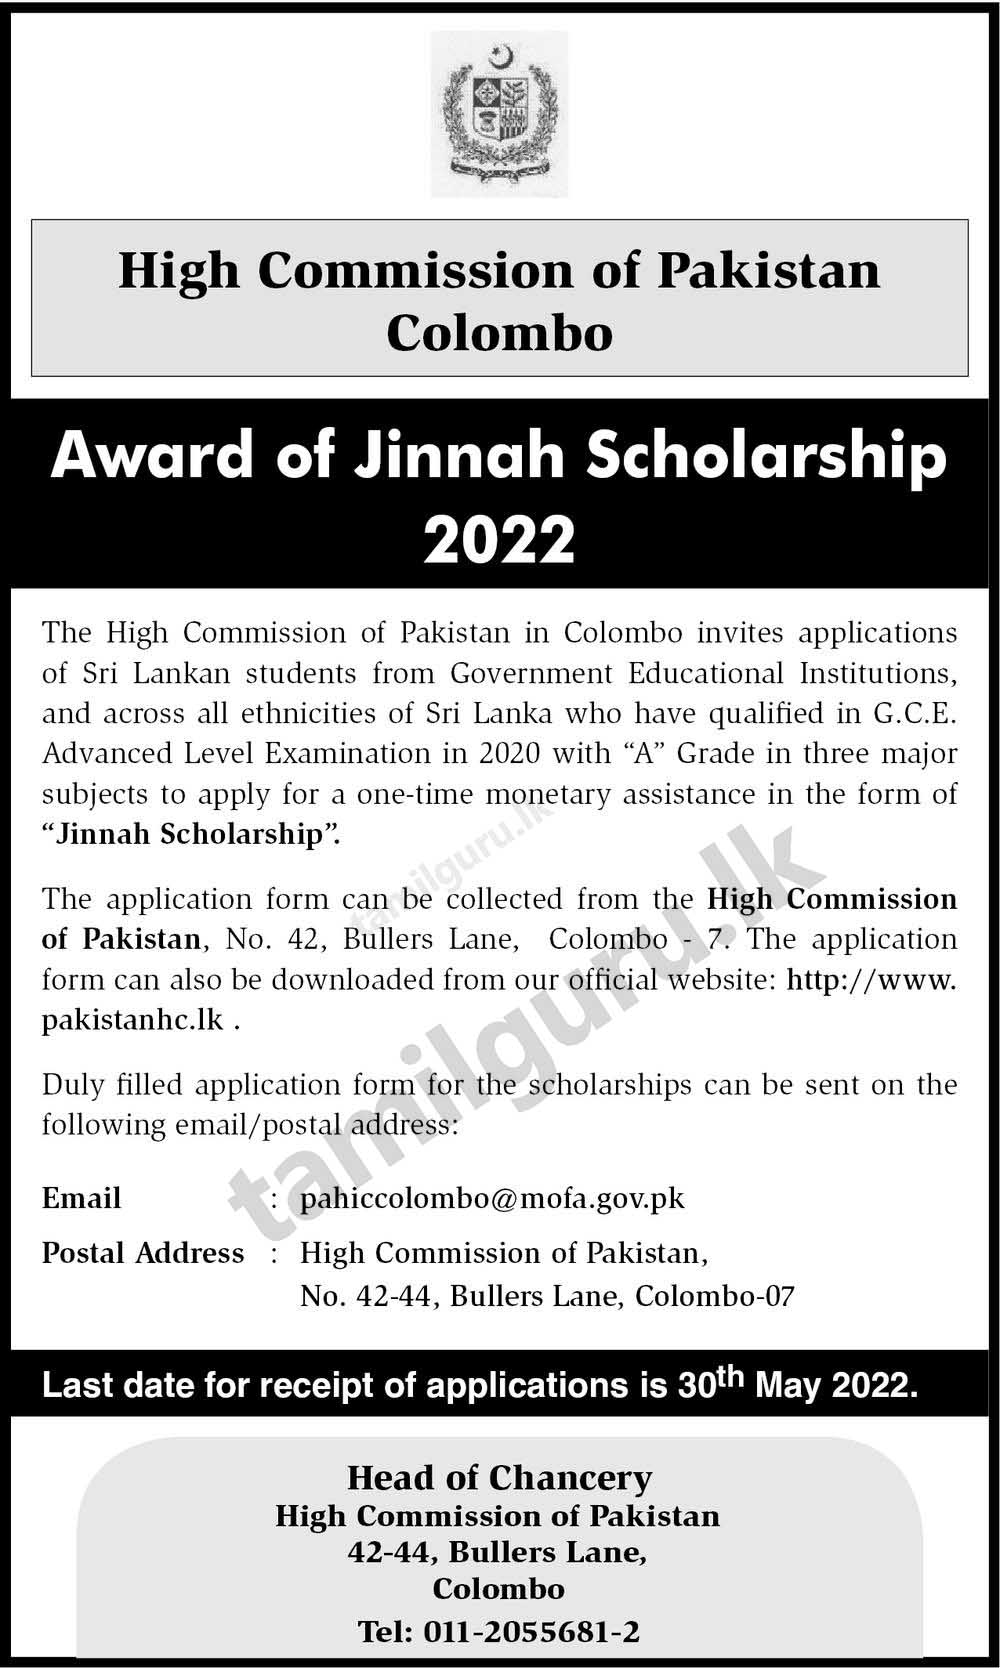 Award of Jinnah Scholarships 2022 for Sri Lankan Students (Details in English)